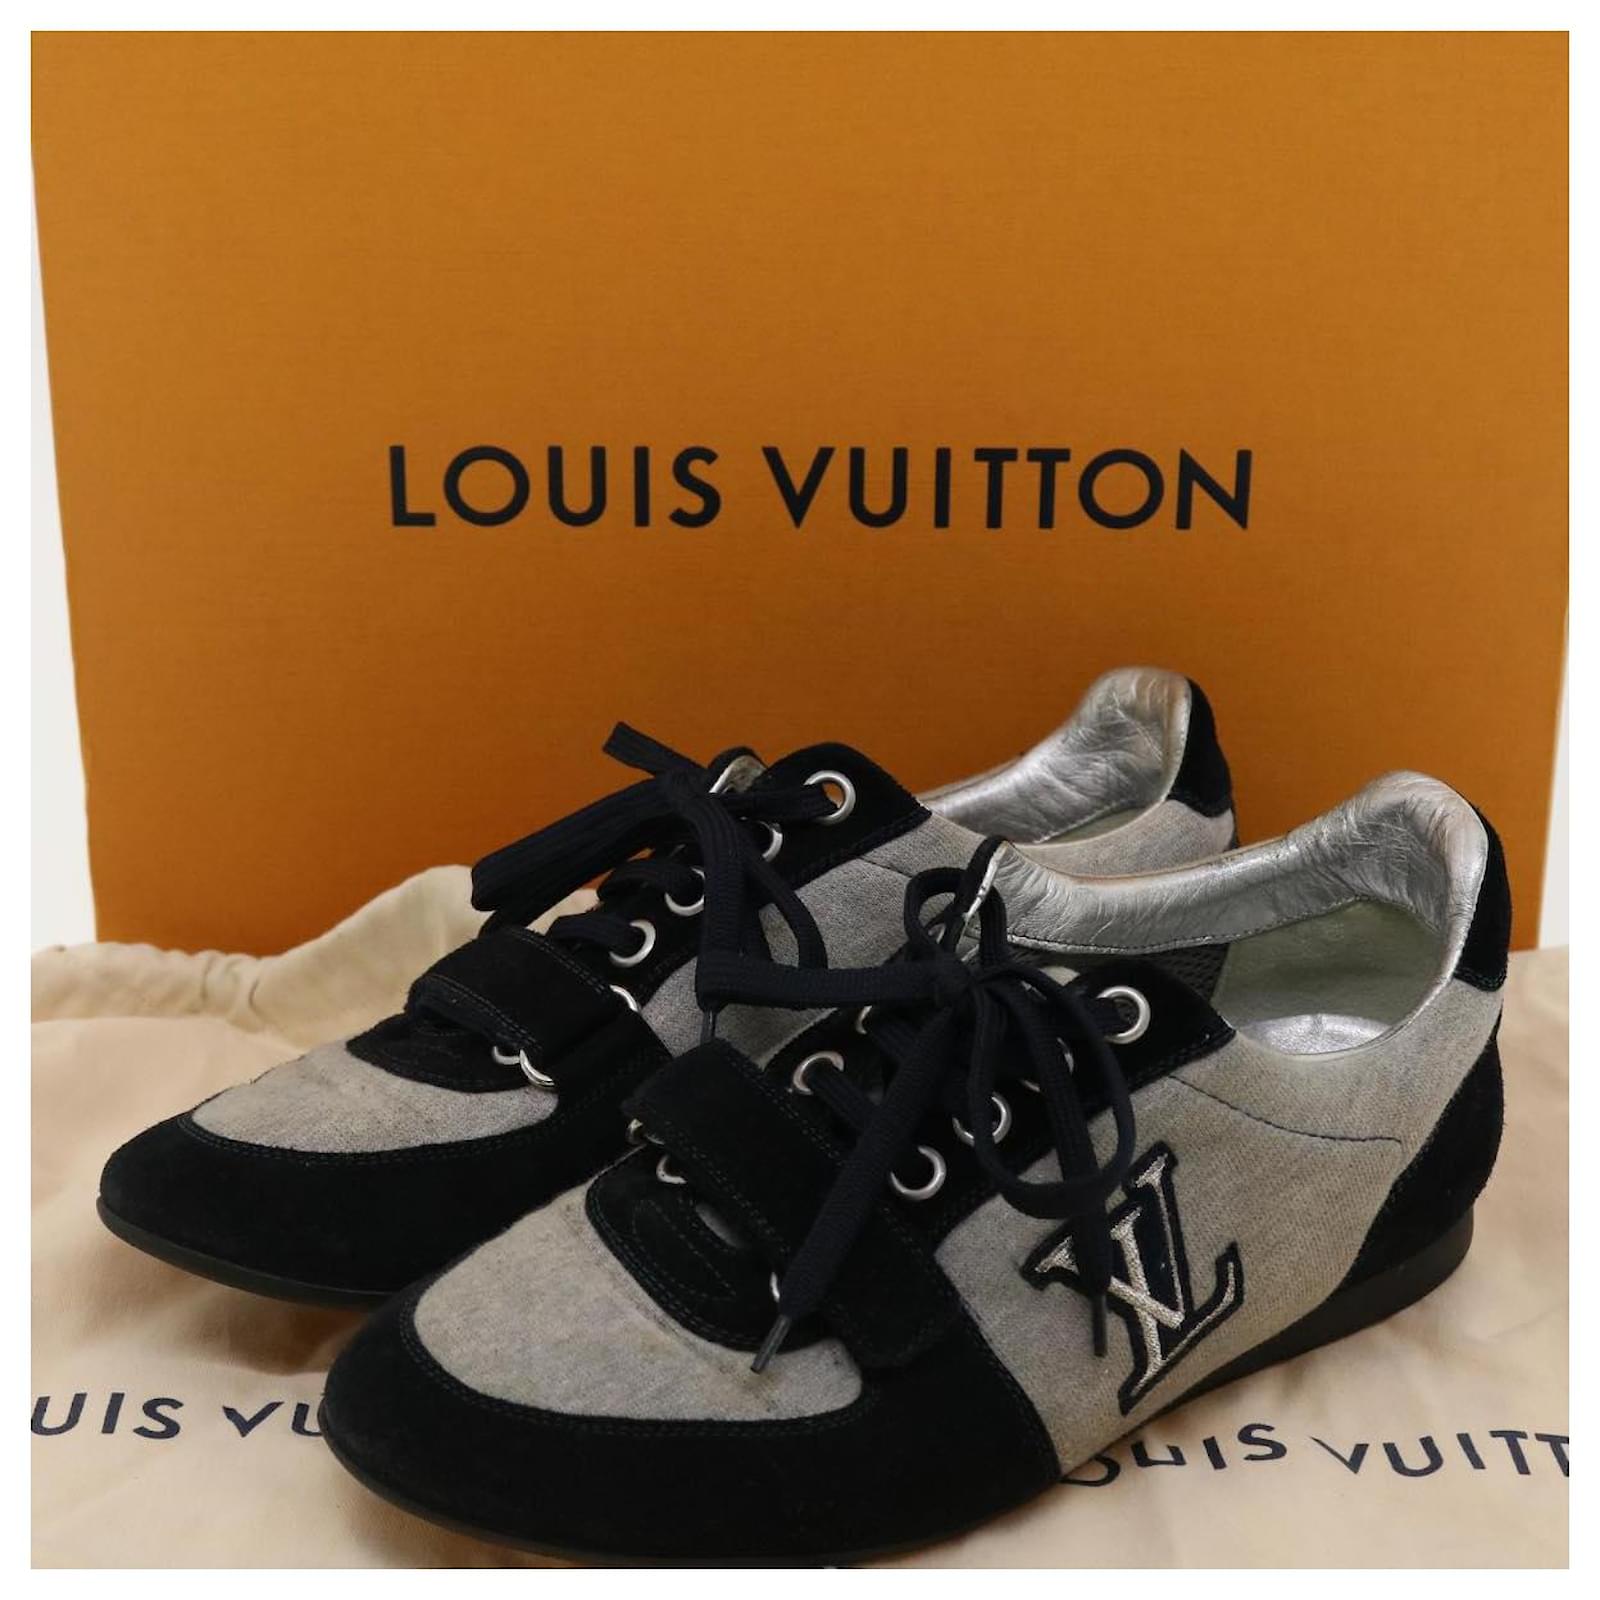 Louis Vuitton Trainer High Top Grey Men's - 1A5A0D - US